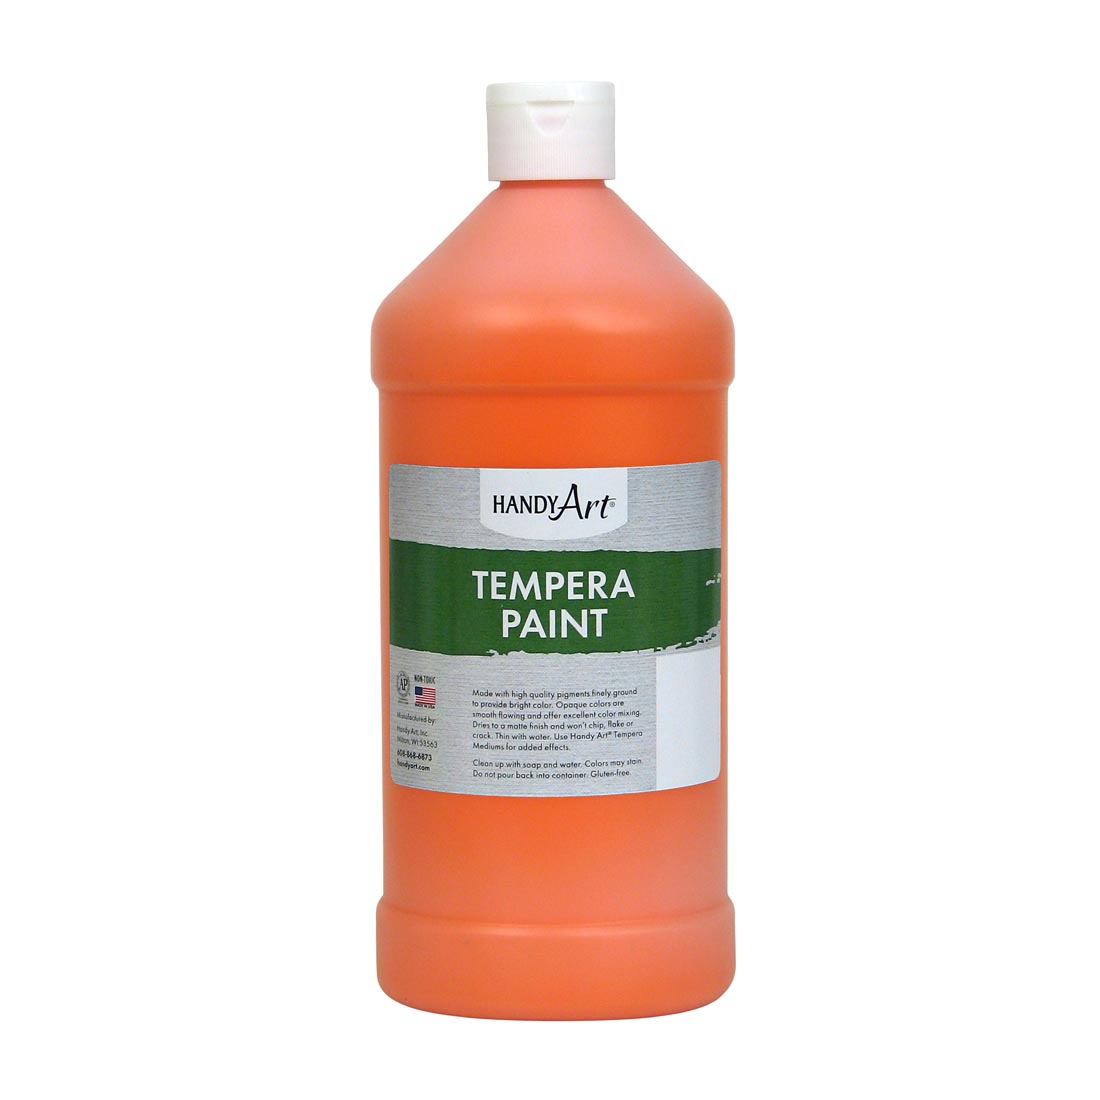 Quart bottle of Orange Handy Art Tempera Paint